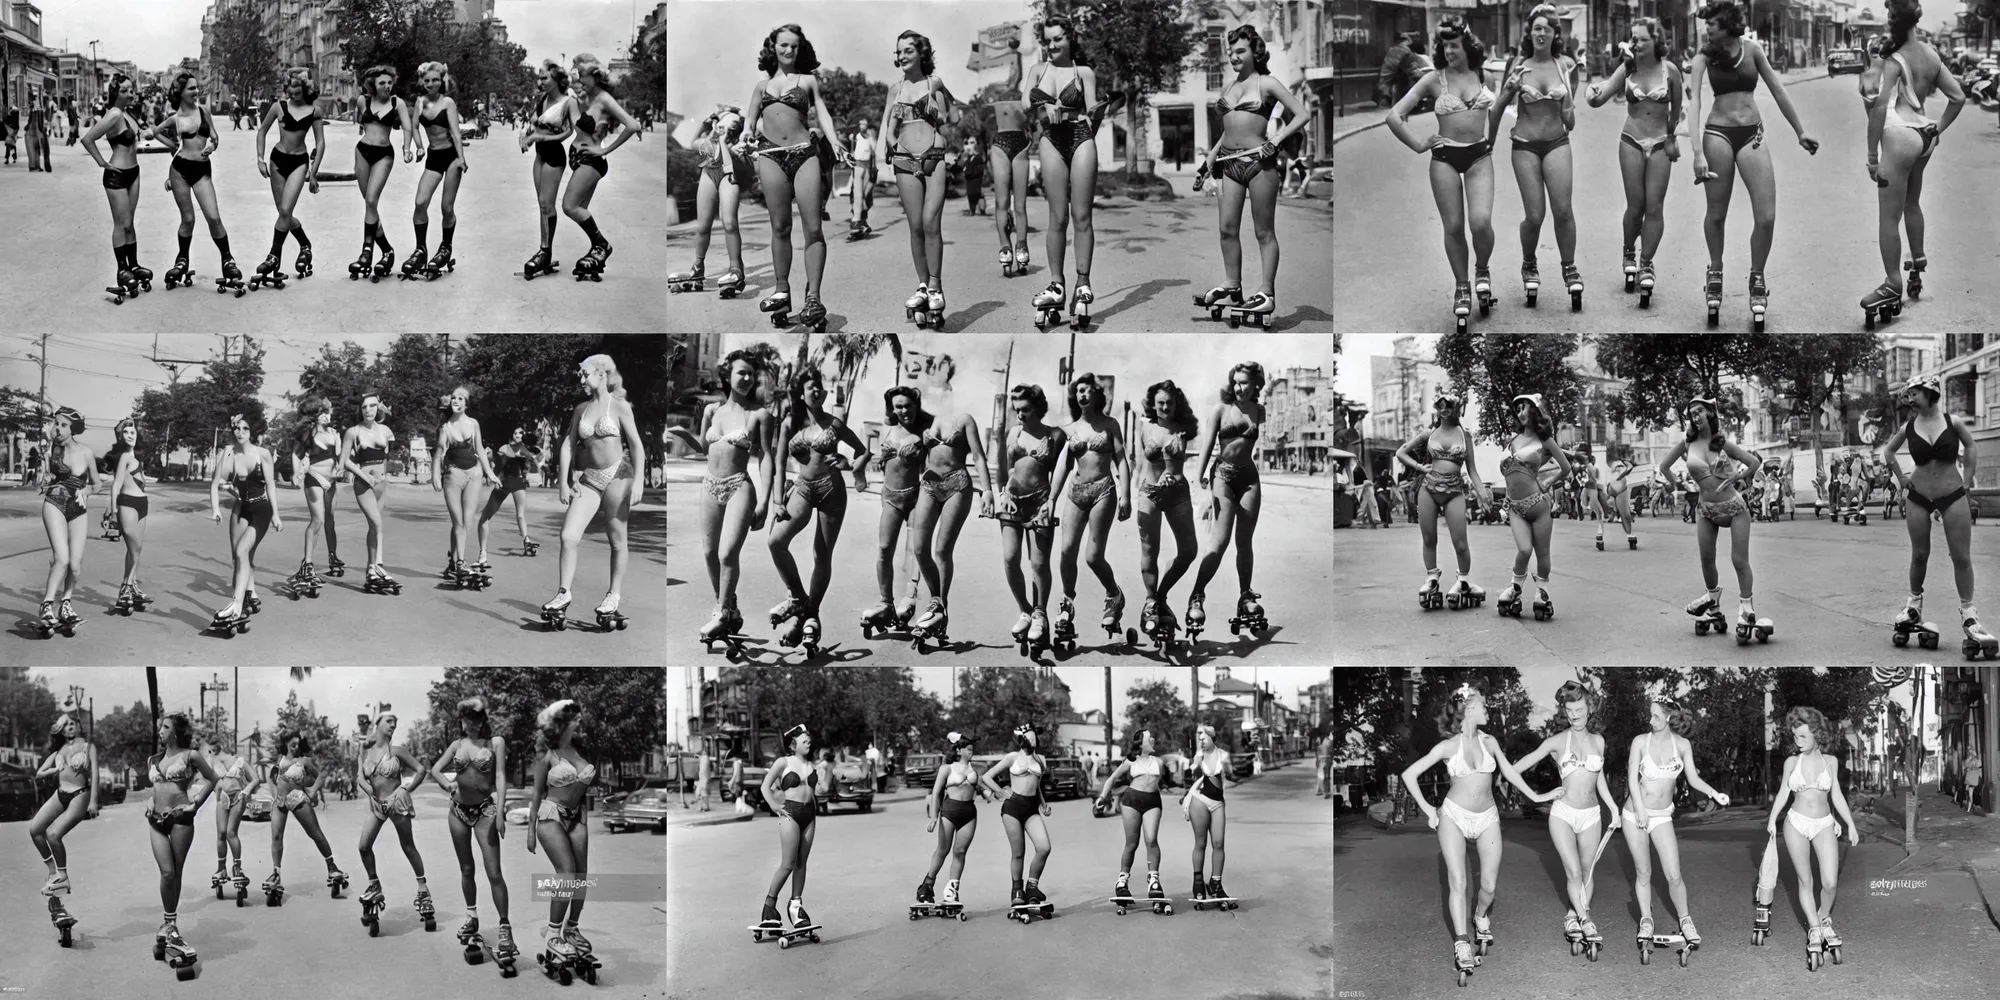 Prompt: 1 9 4 4 bikini models rollerblading on the streets